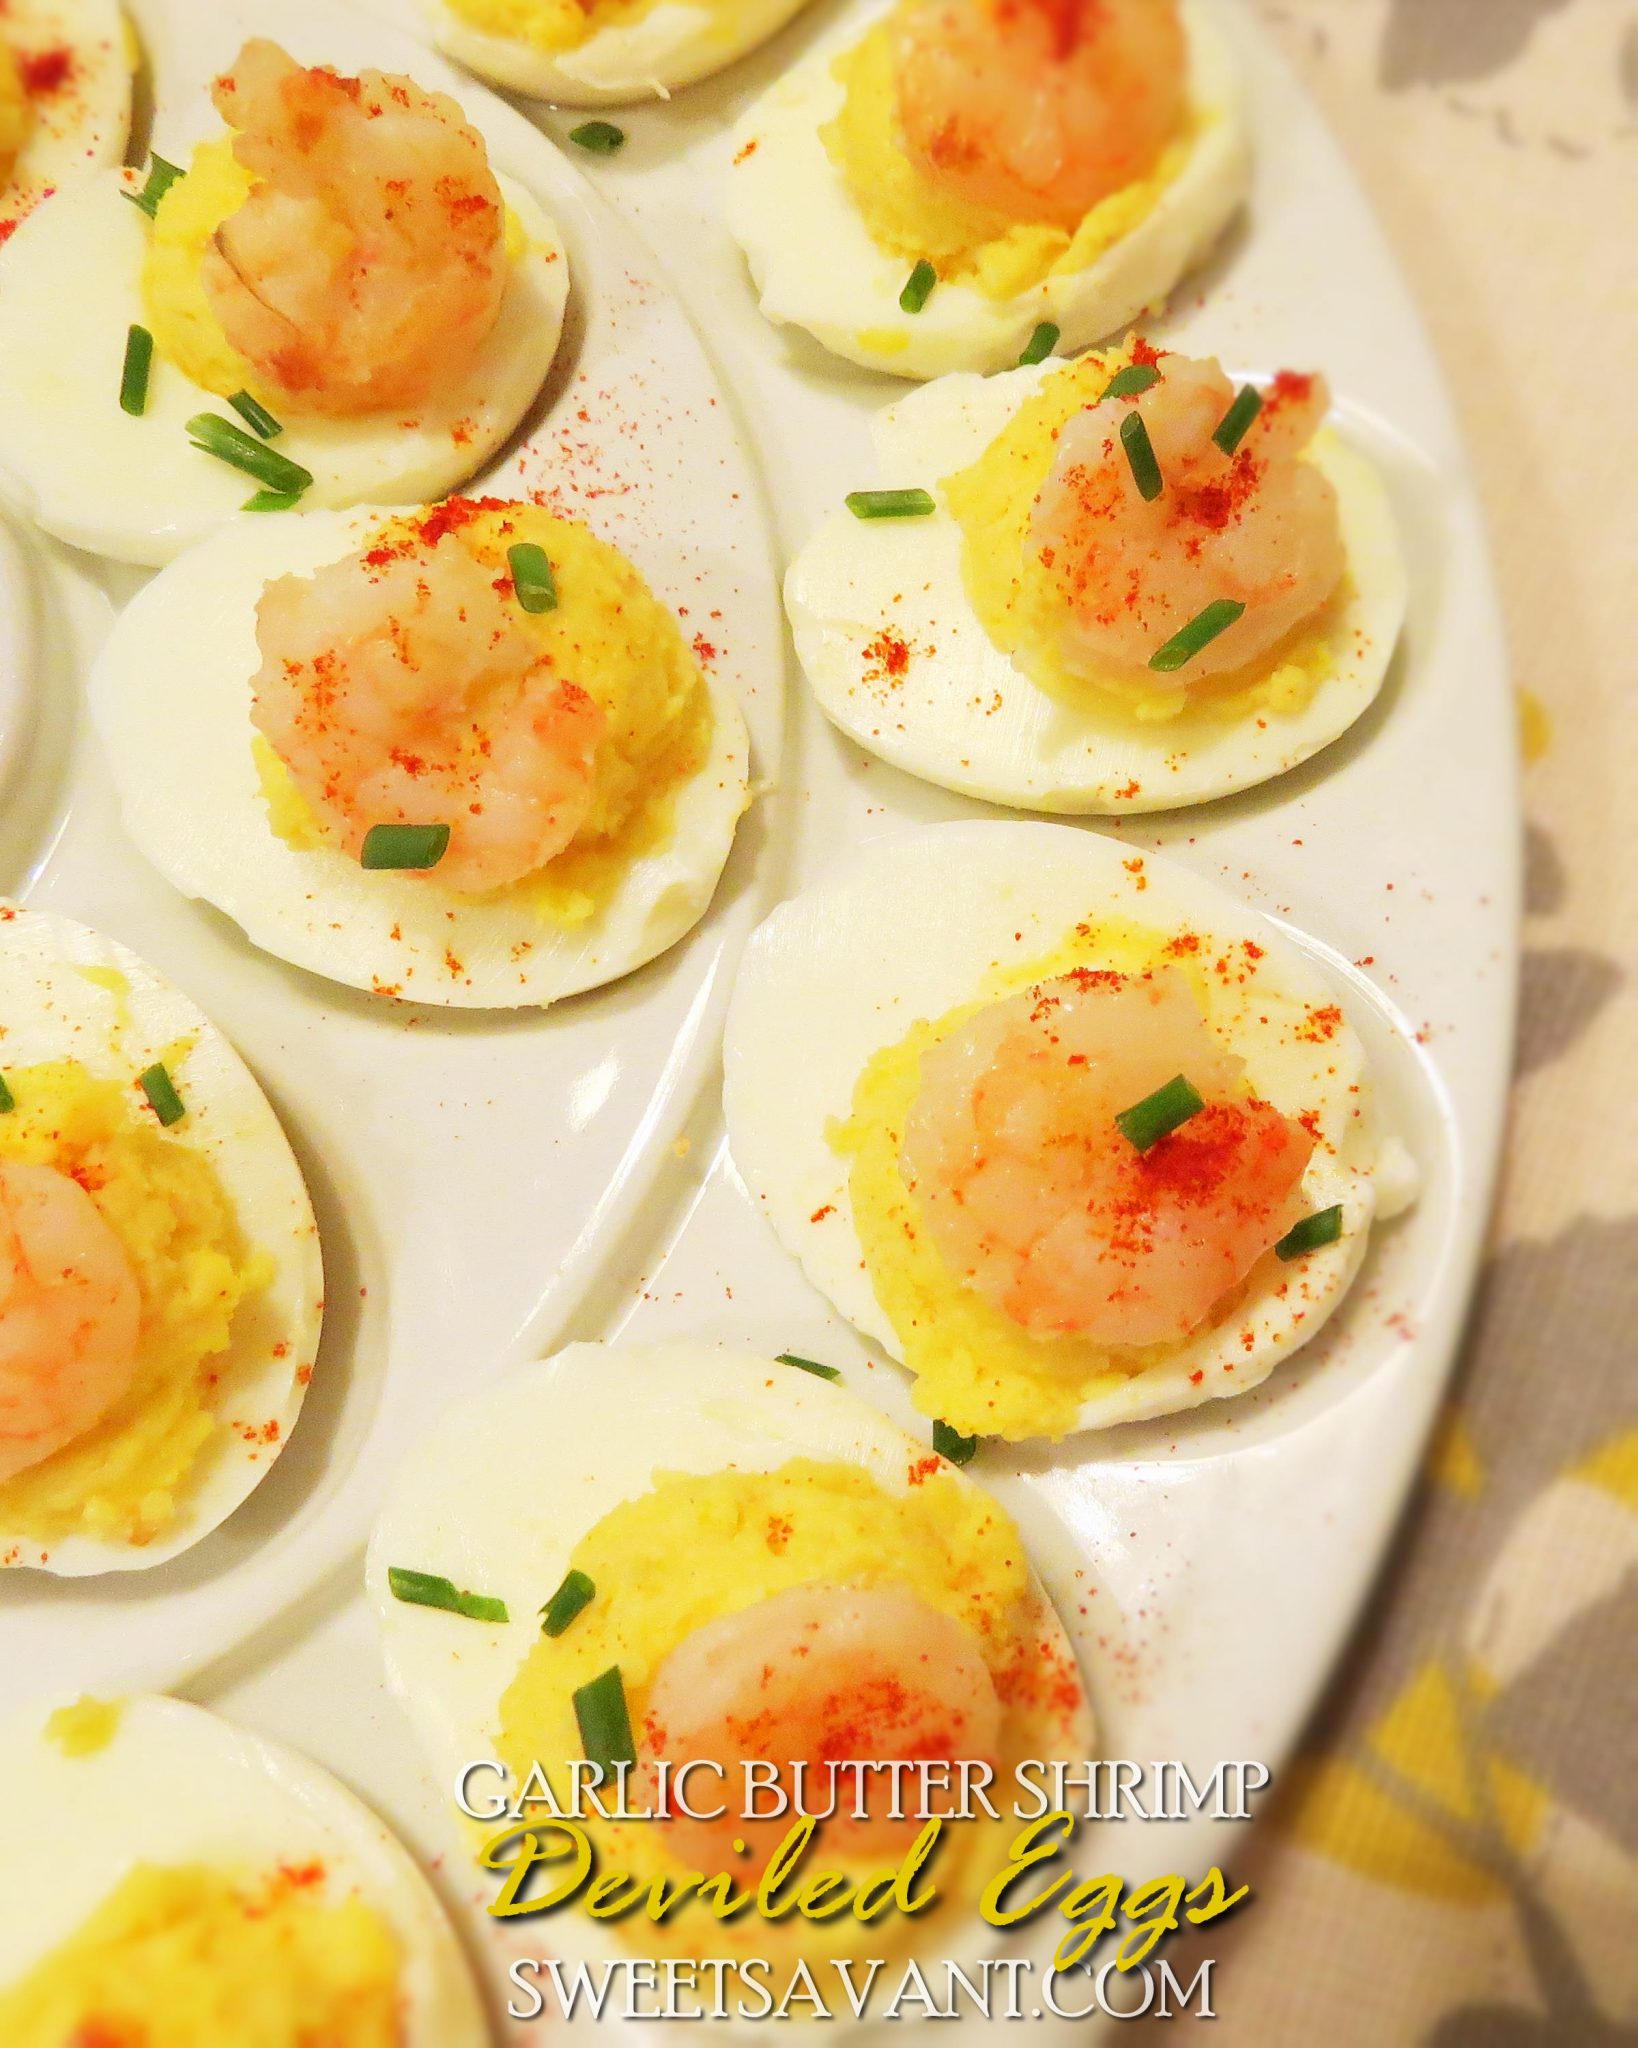 garlic butter shrimp deviled eggs SweetSavant.com America's best food blog